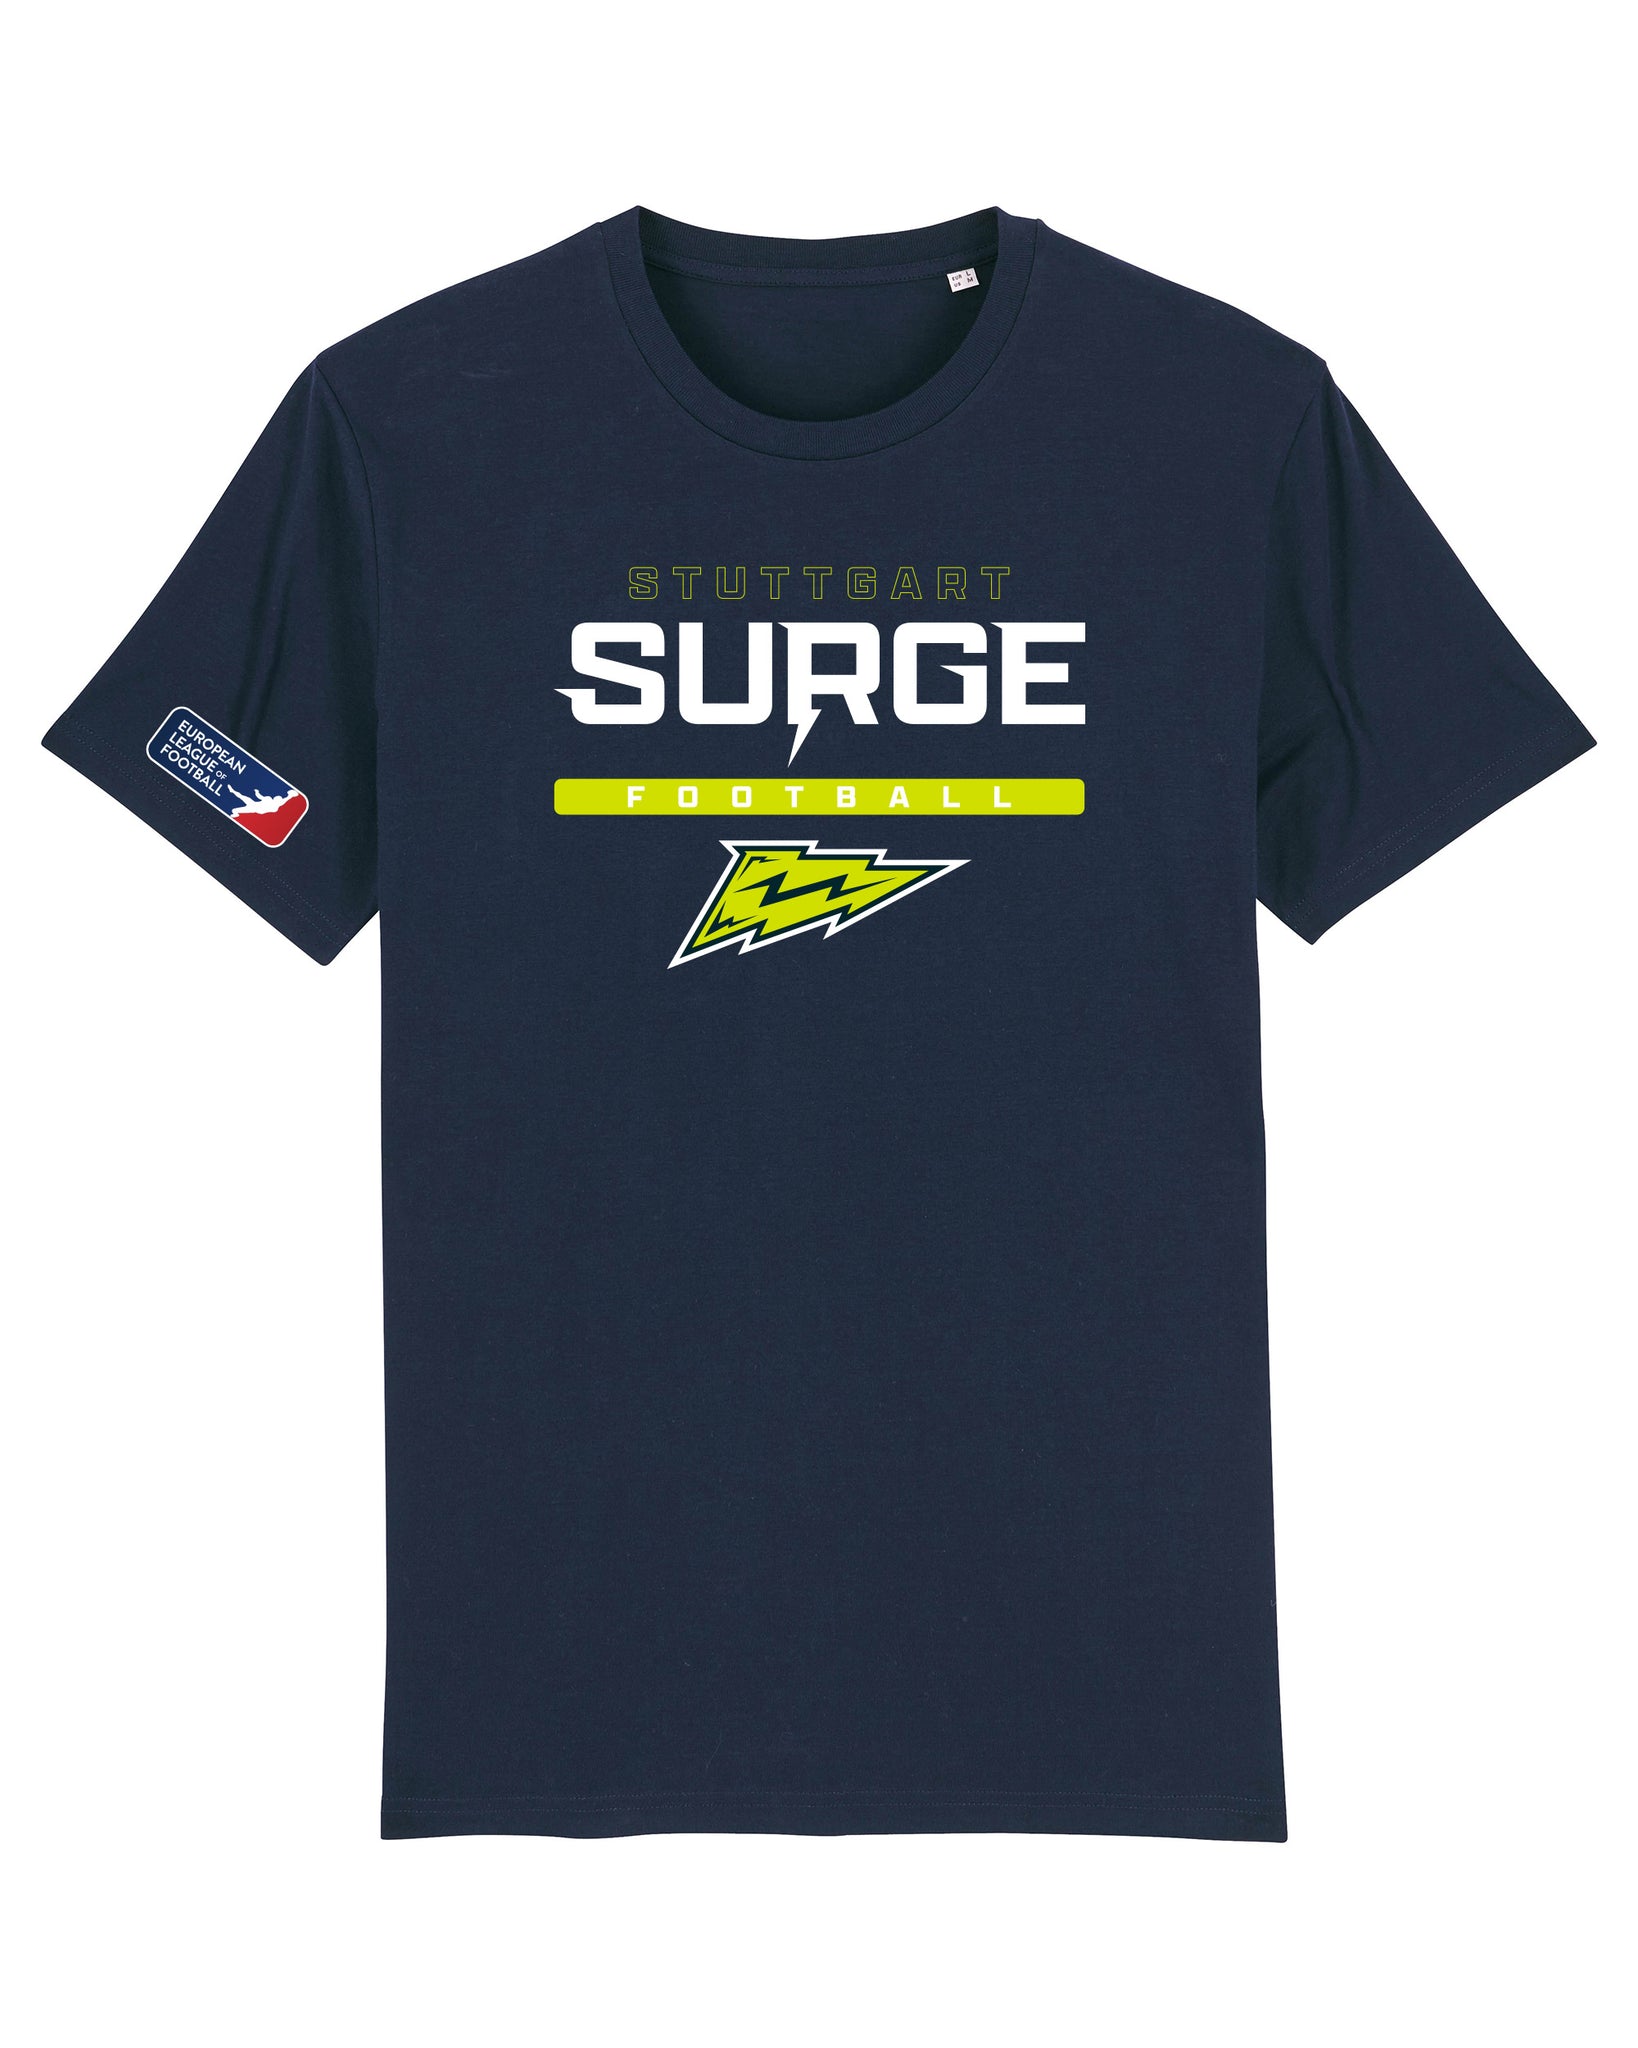 Stuttgart Surge Identity T-Shirt